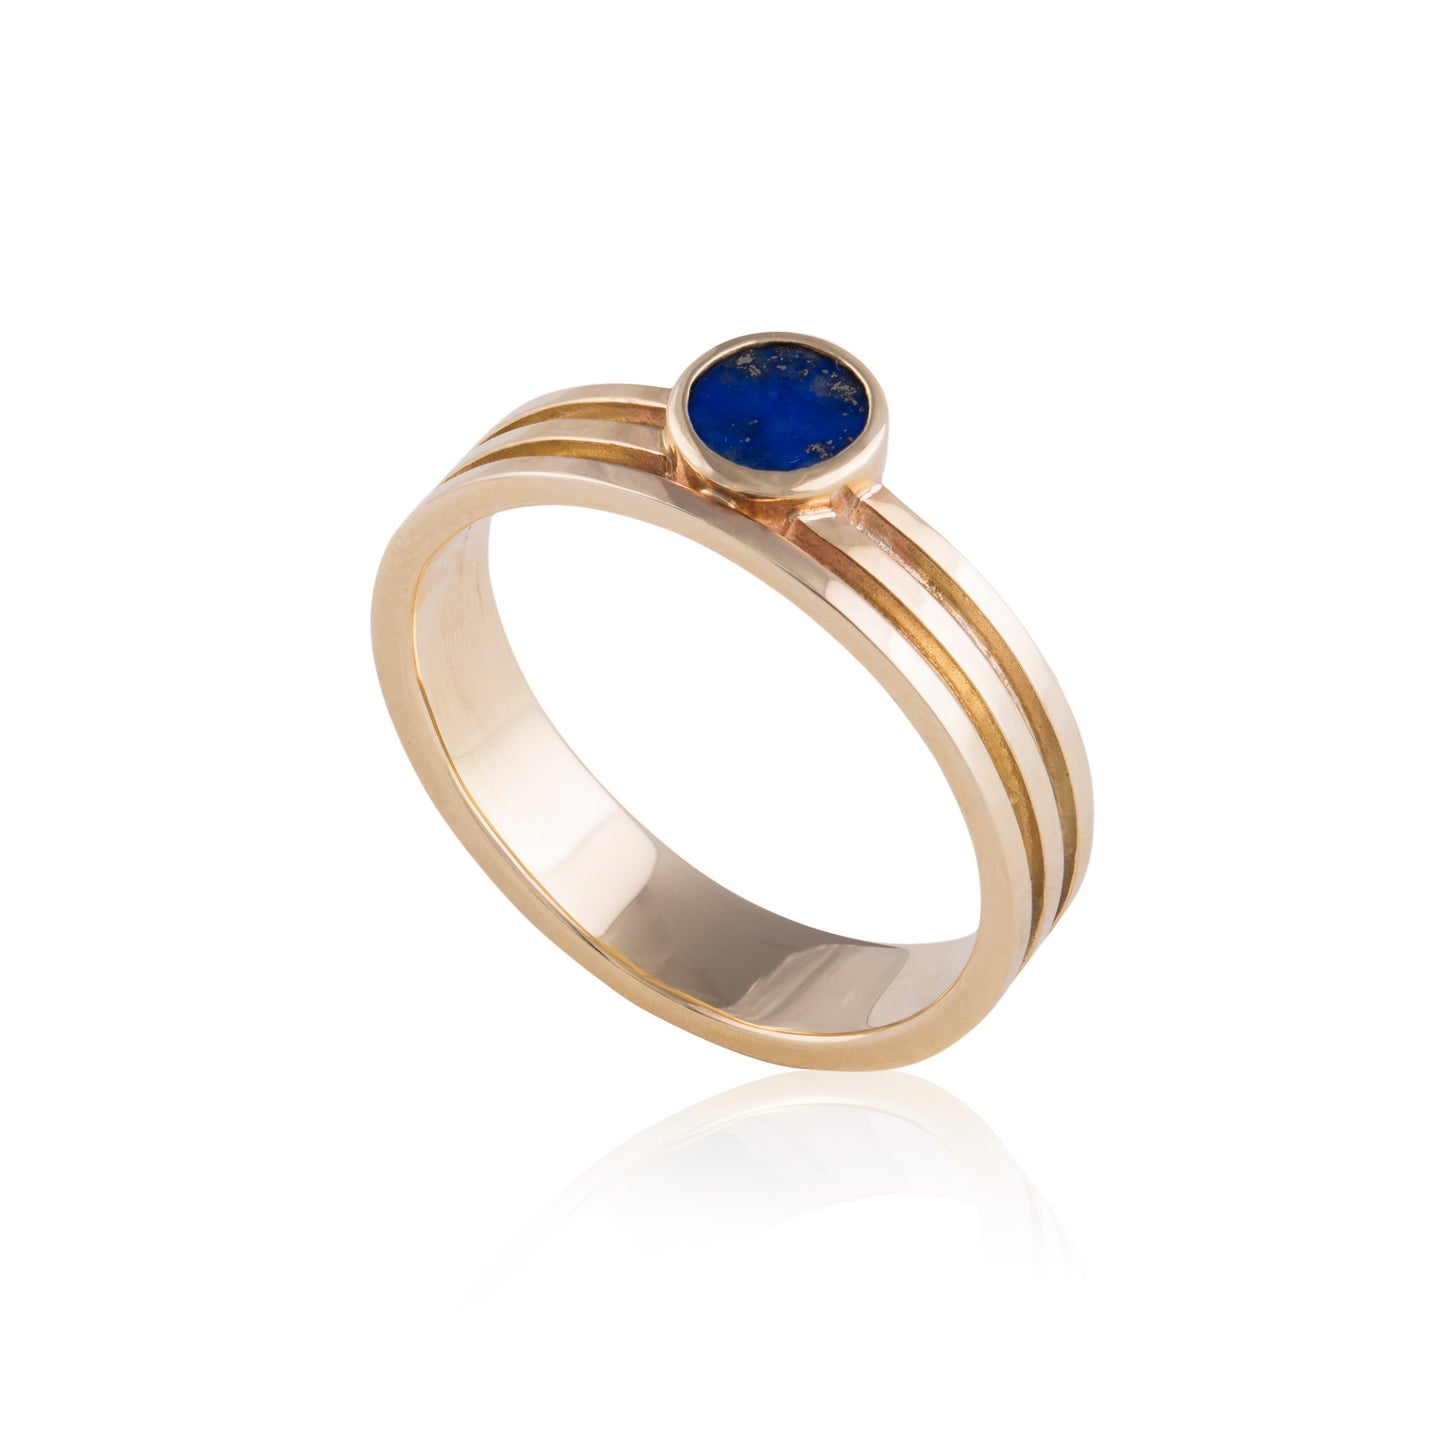 Linea Ring set with Lapis Lazuli